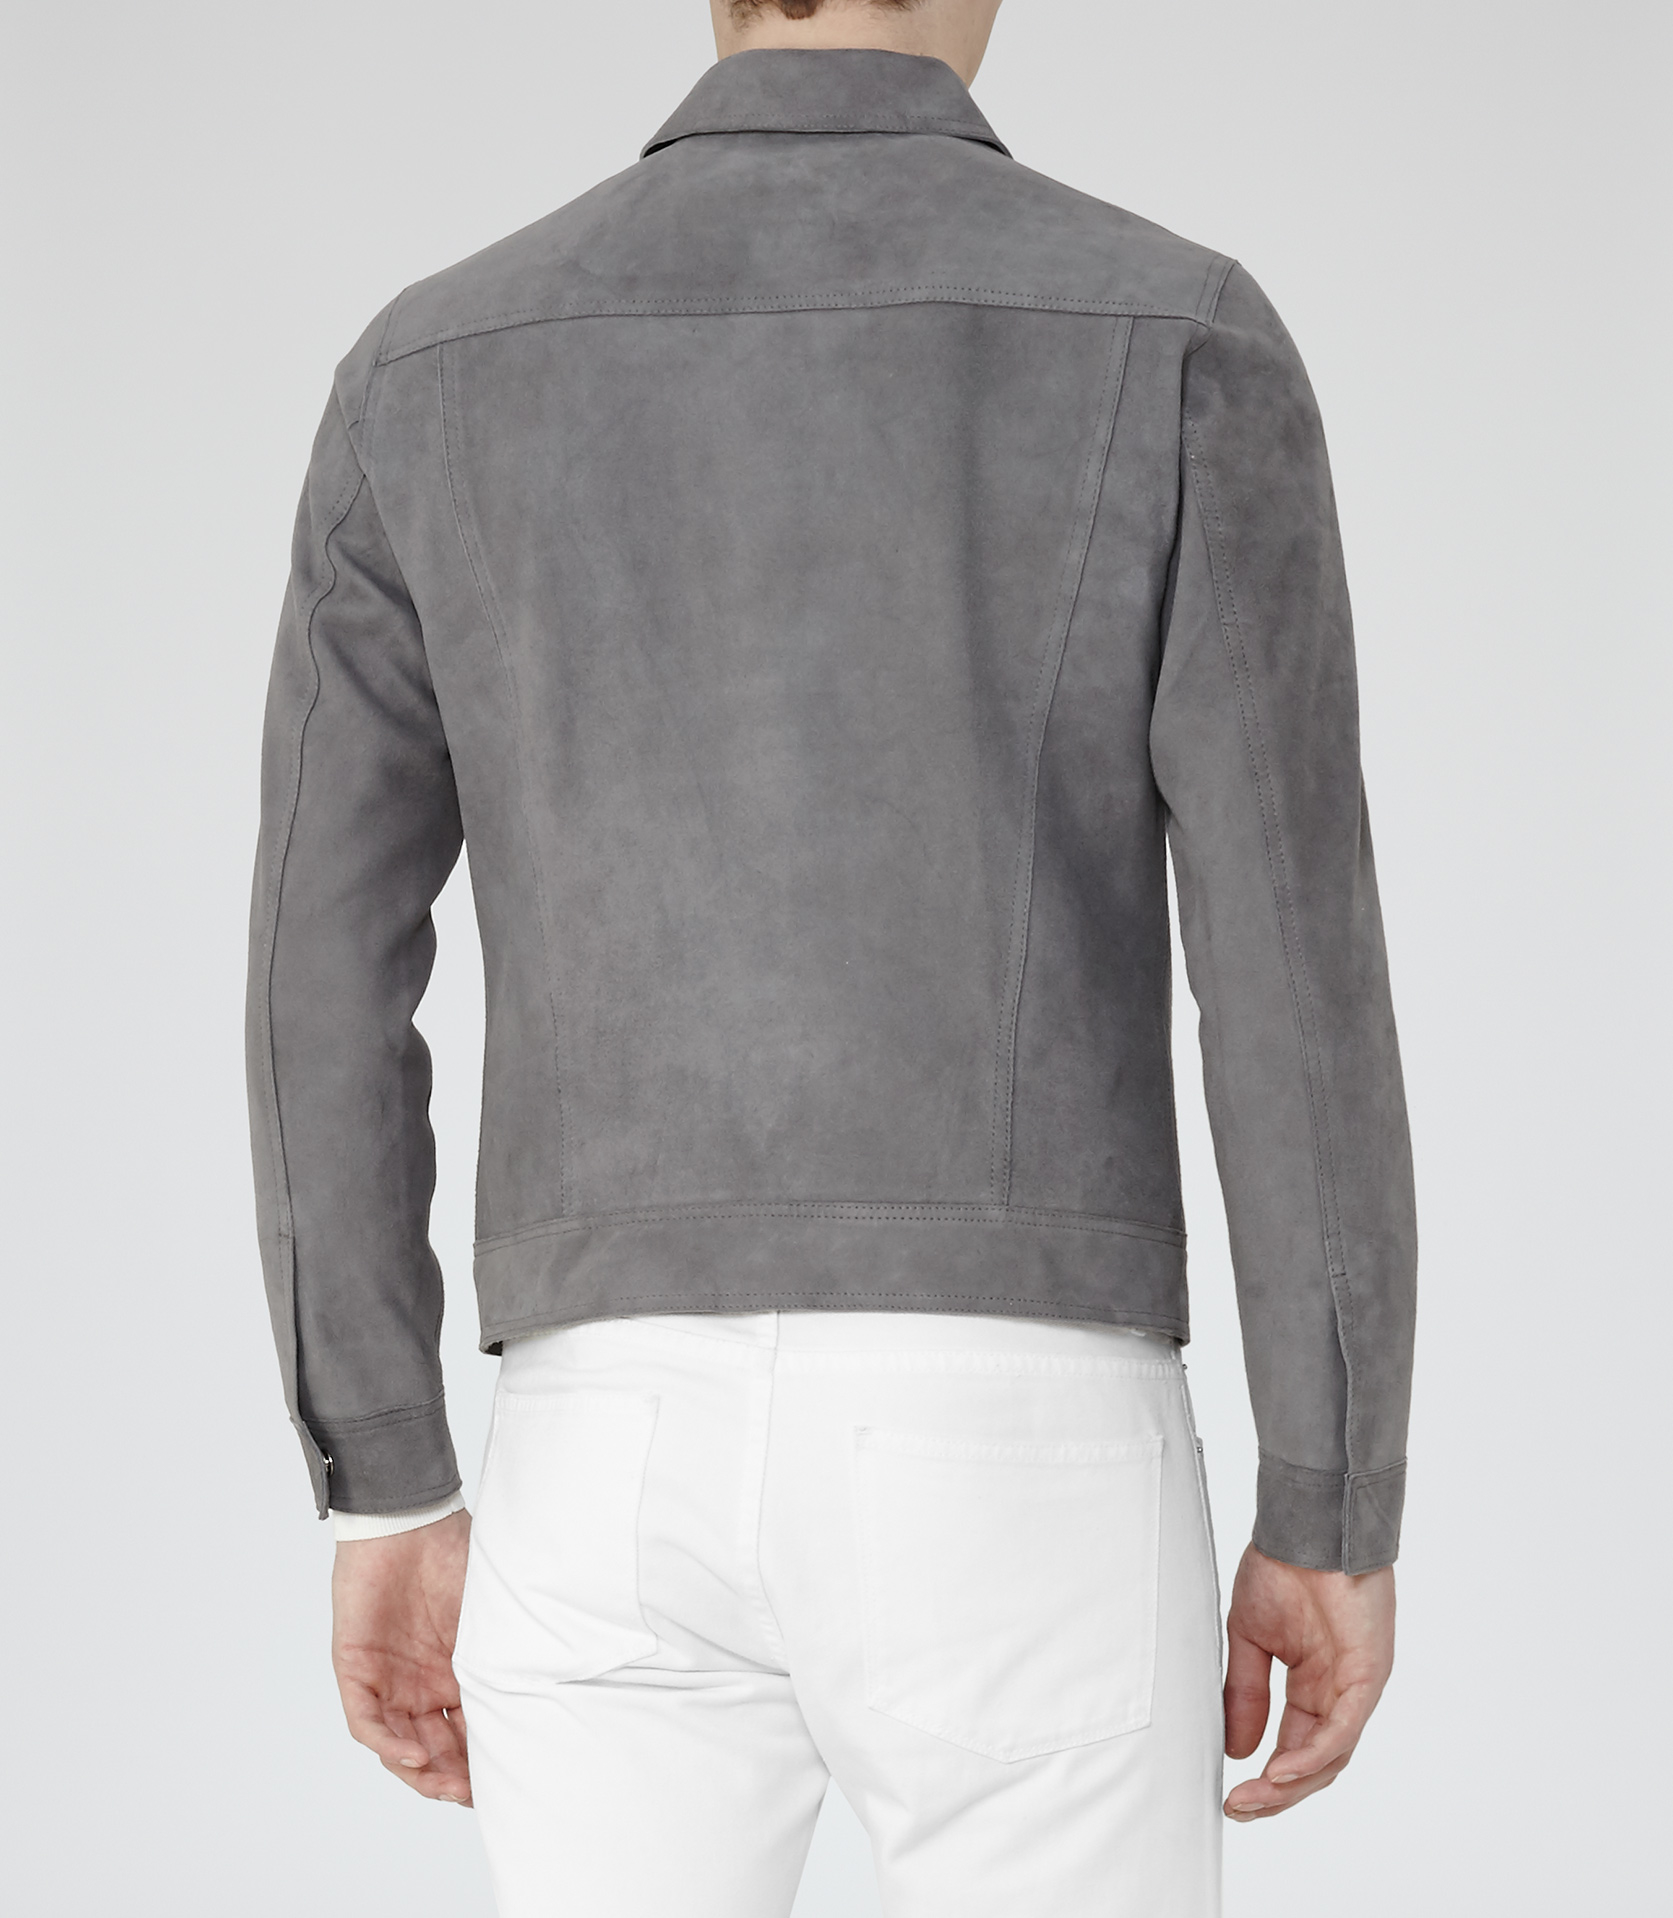 Reiss Bastian Suede Jacket in Grey (Gray) for Men - Lyst